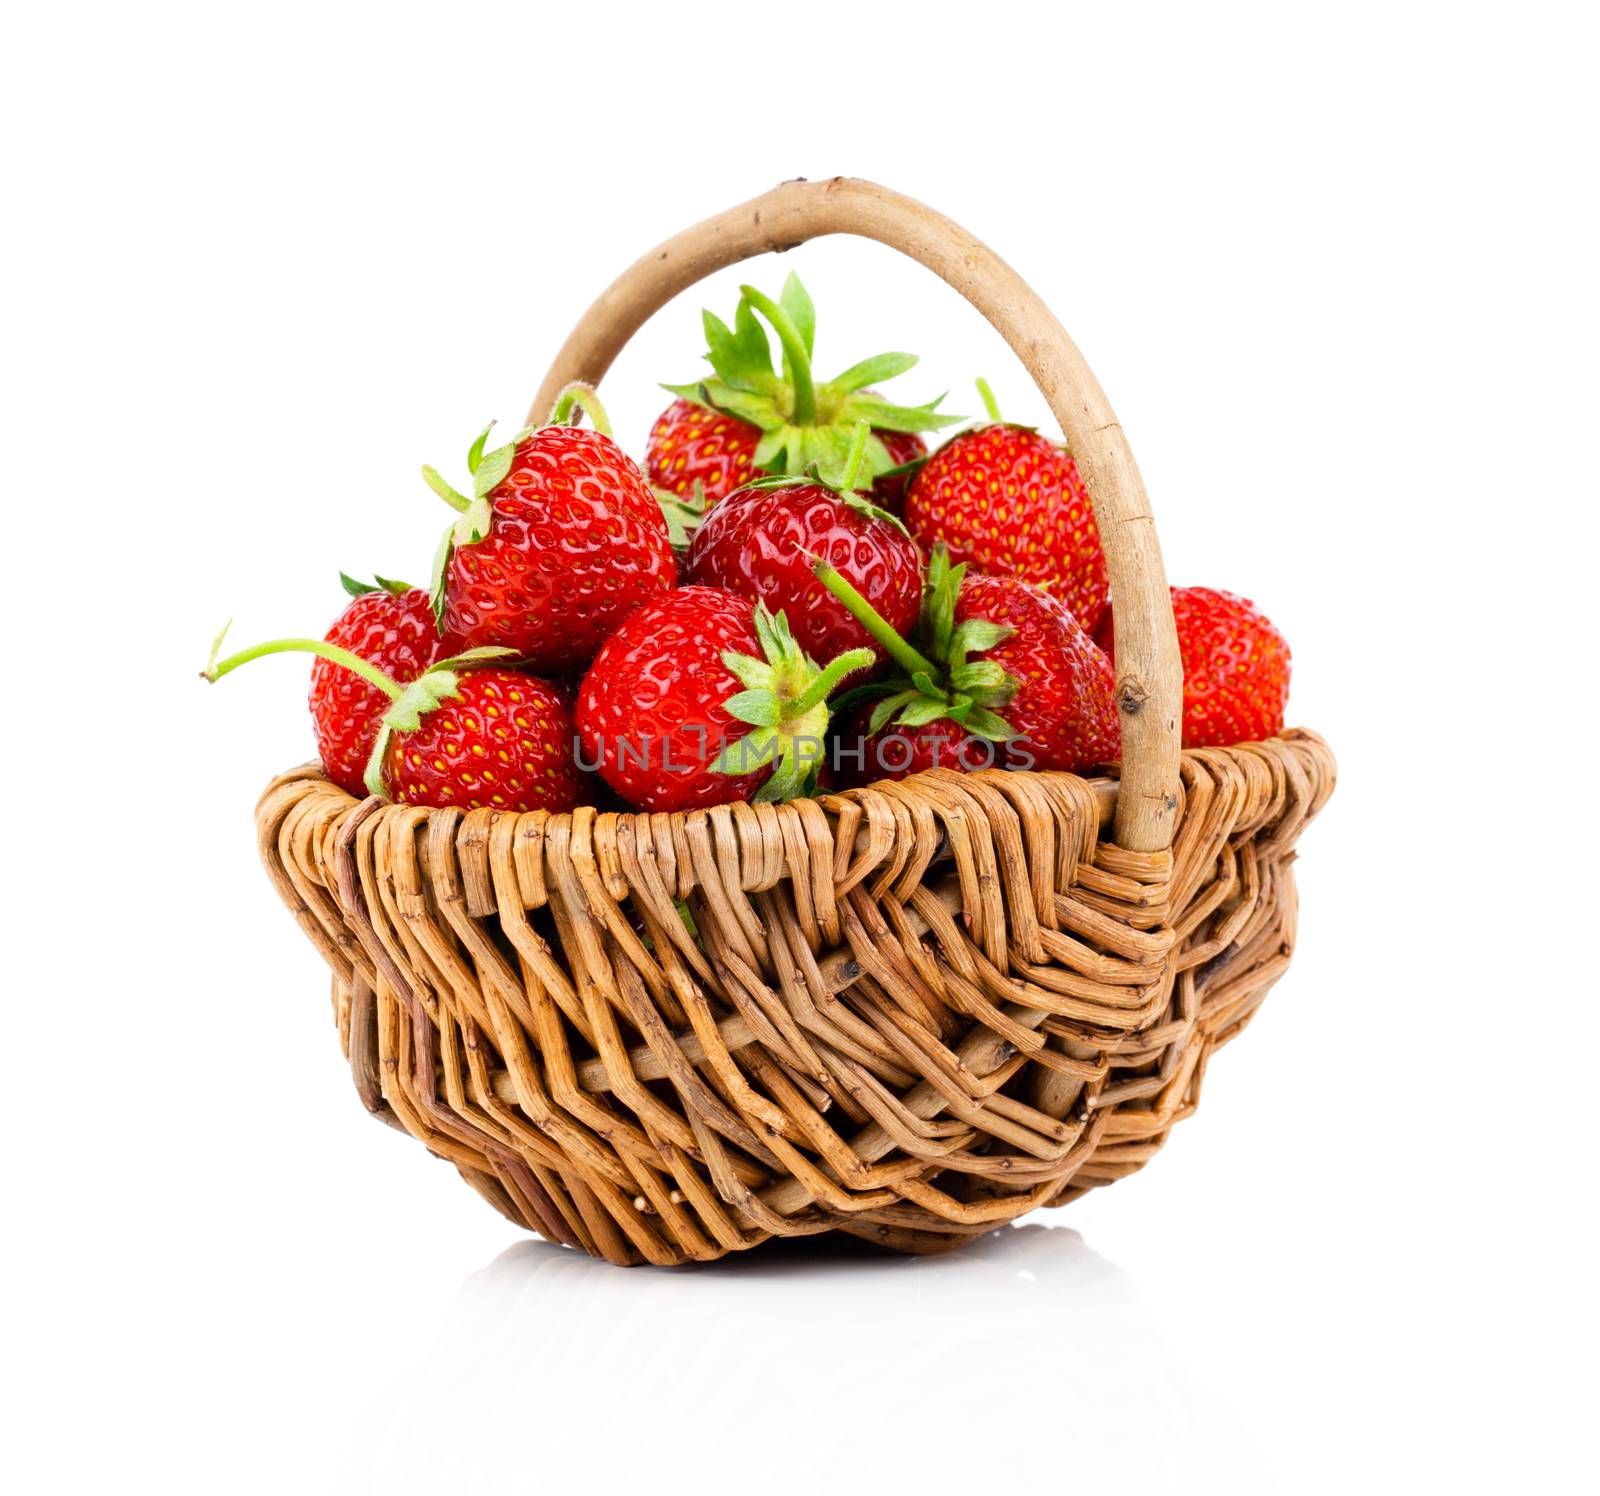 Strawberries in wicker basket, on white background